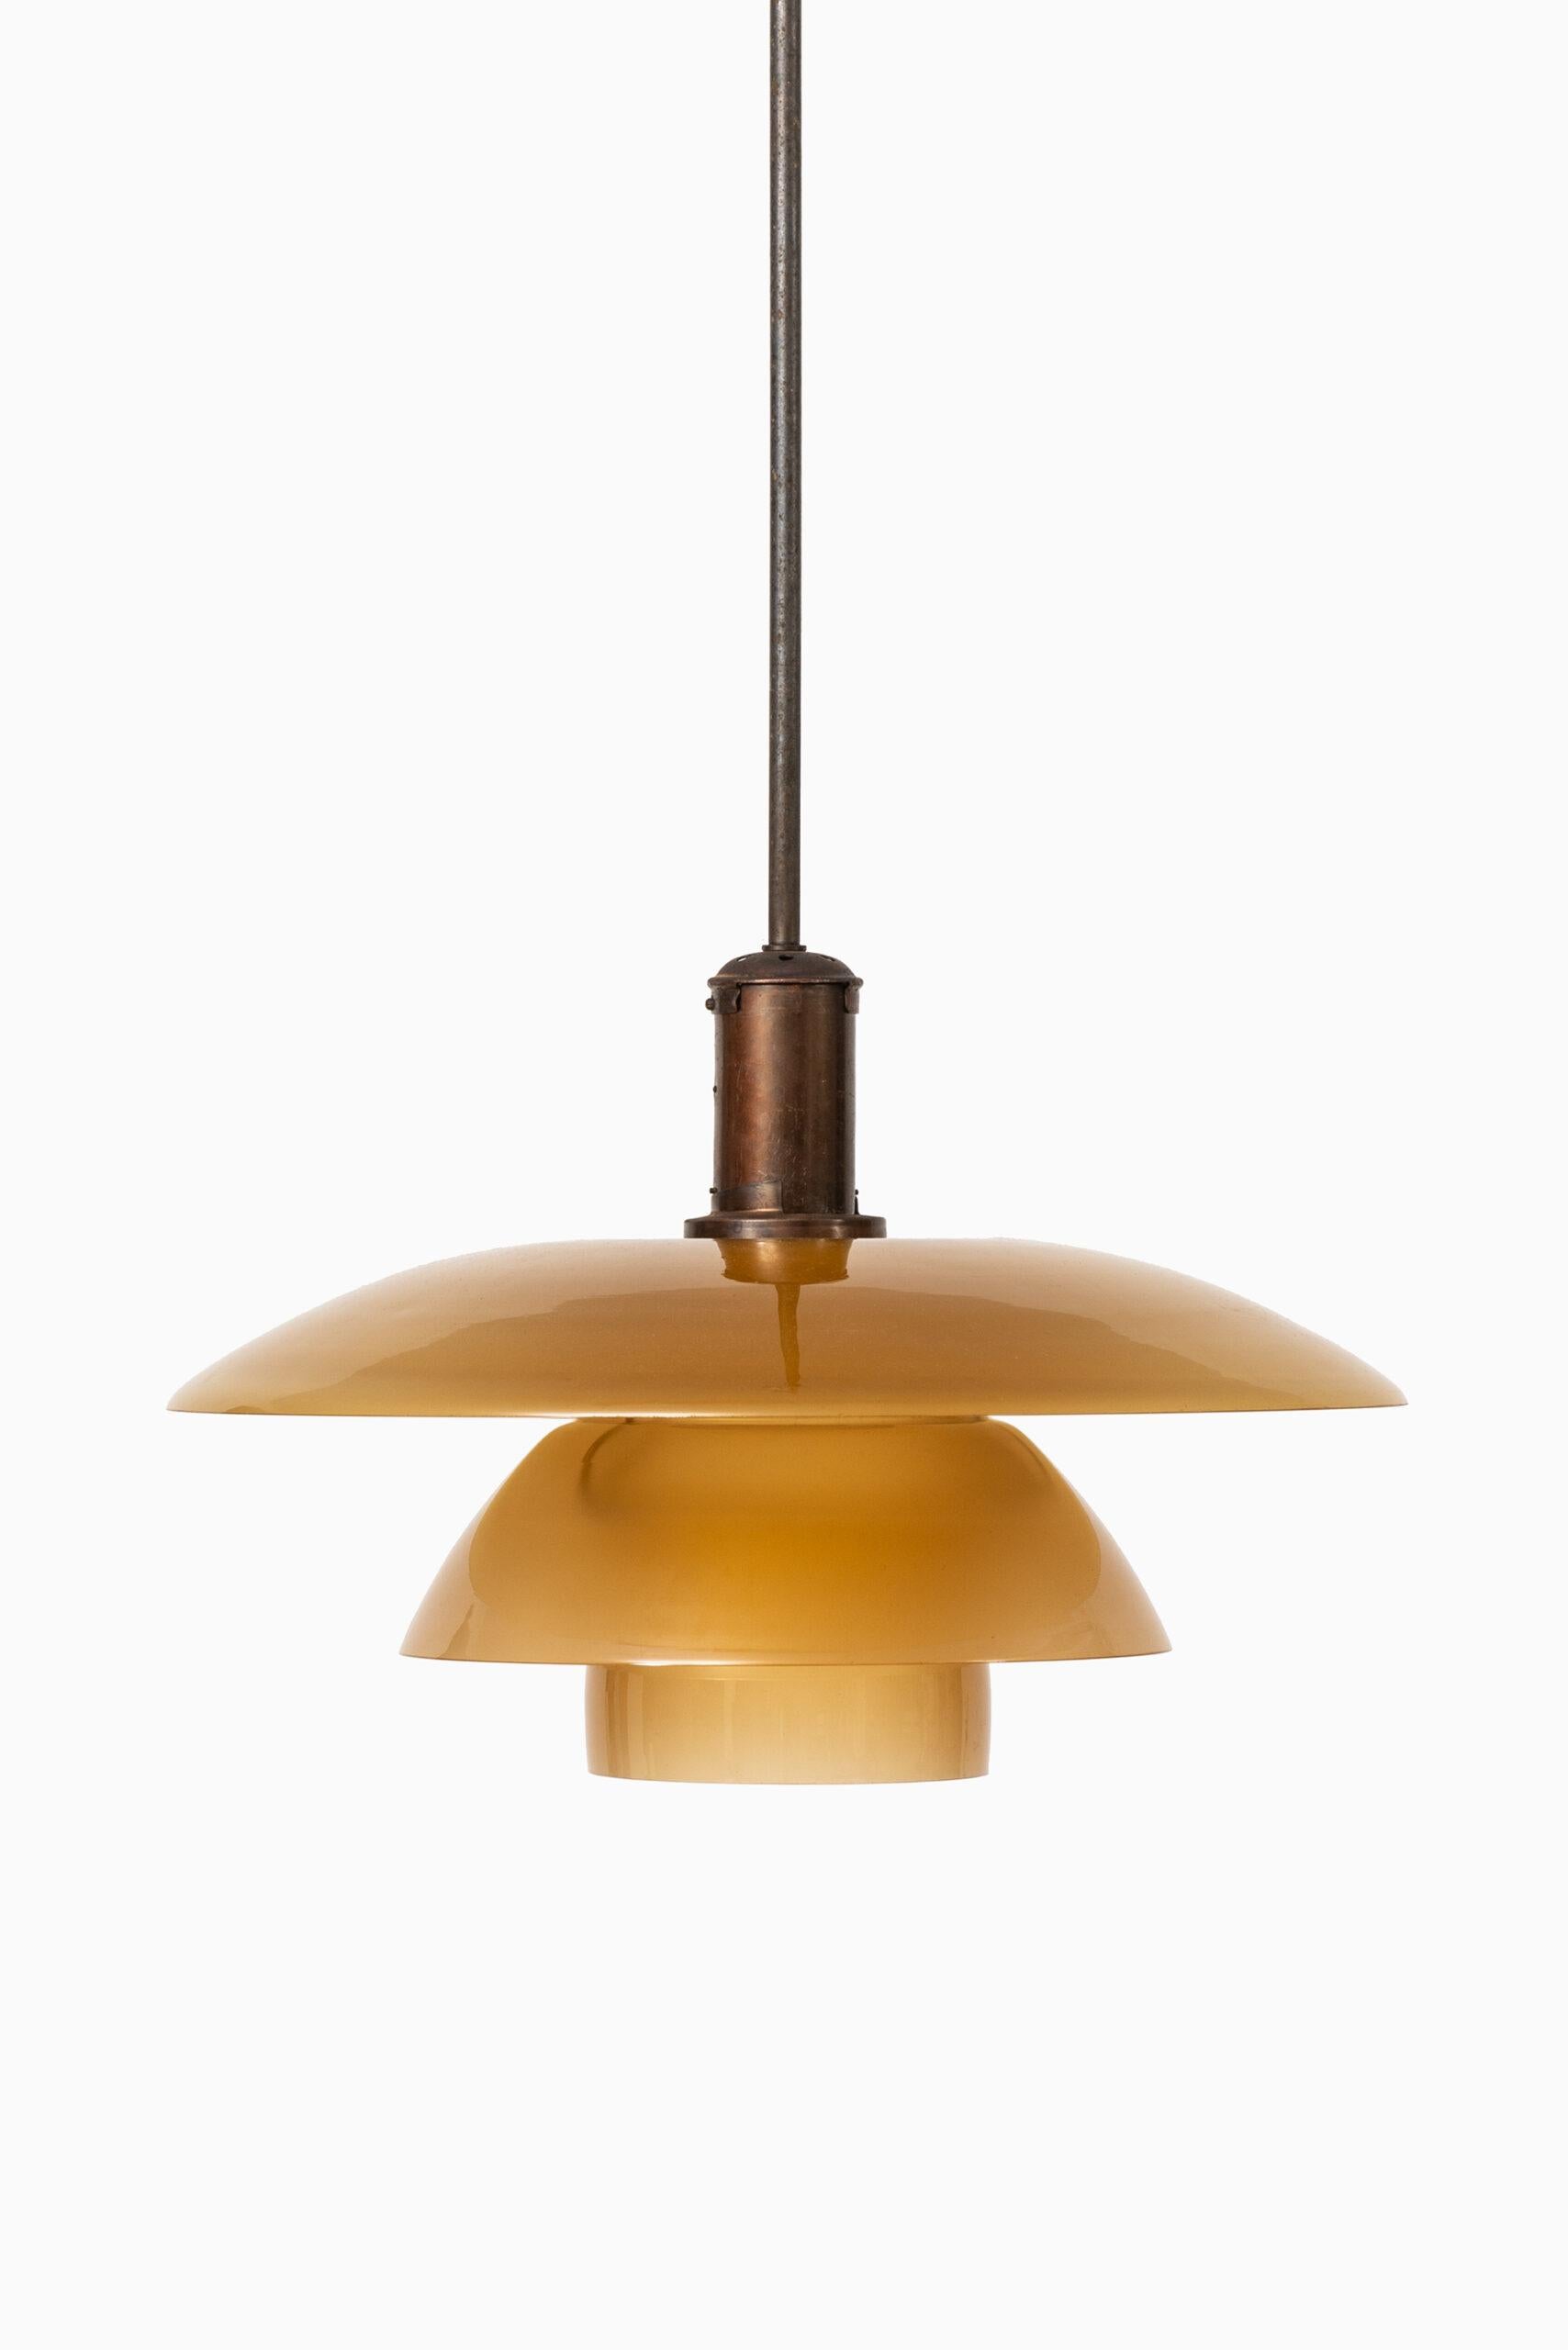 Brass Poul Henningsen Ceiling Lamp PH-5/5 Produced by Louis Poulsen in Denmark